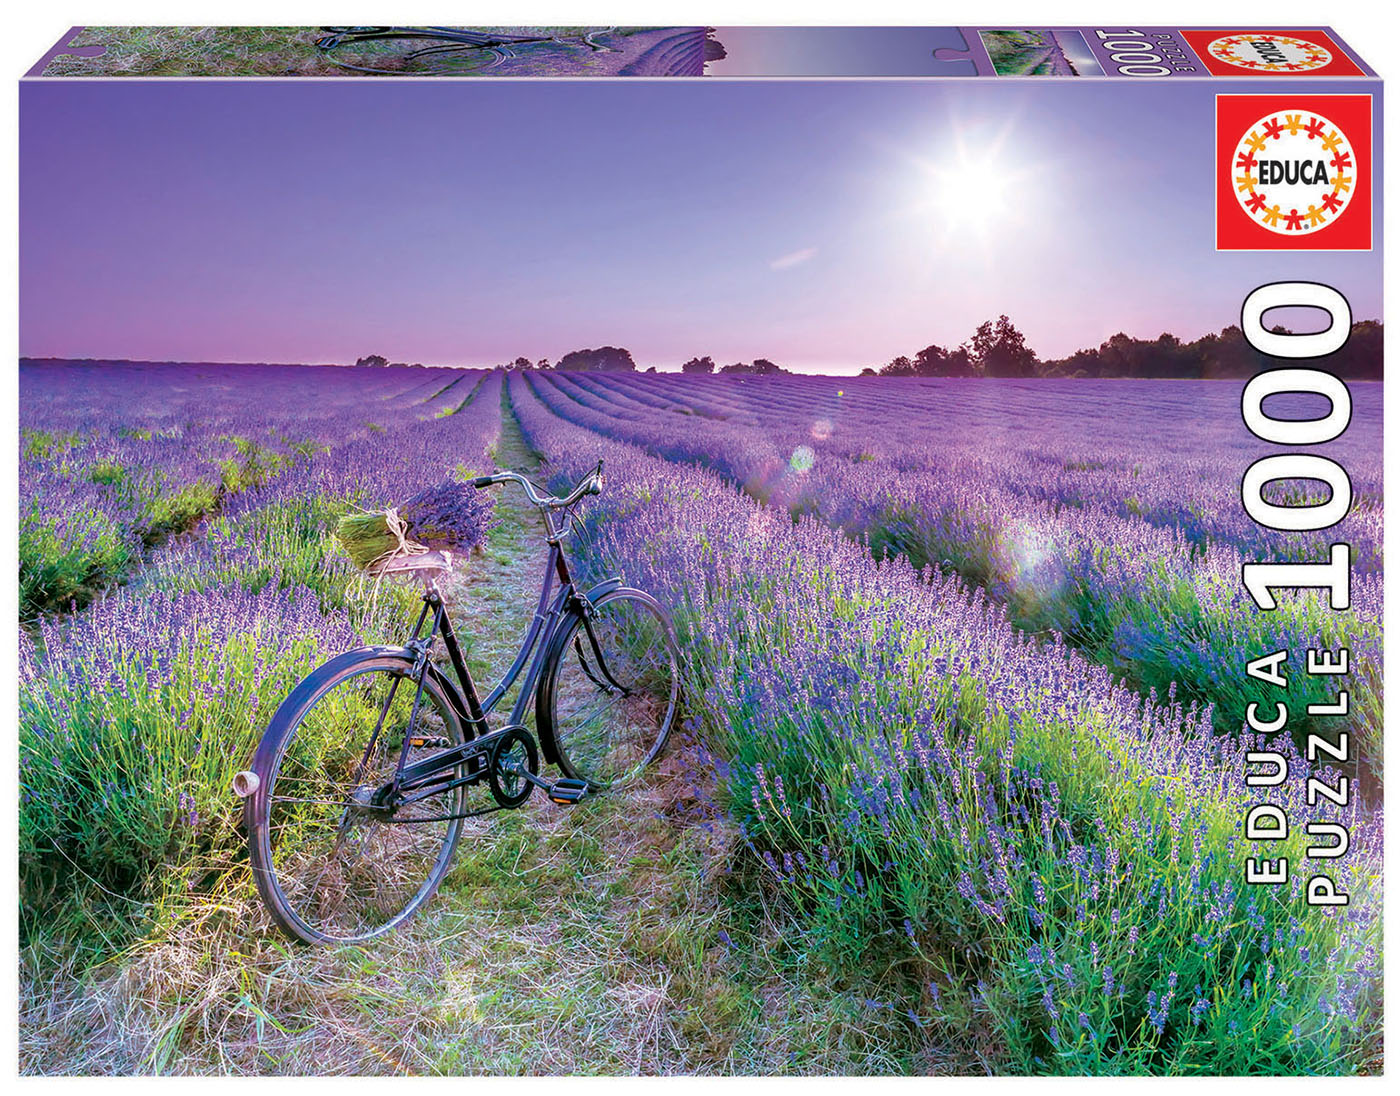 1000 Bike in a Lavender Field